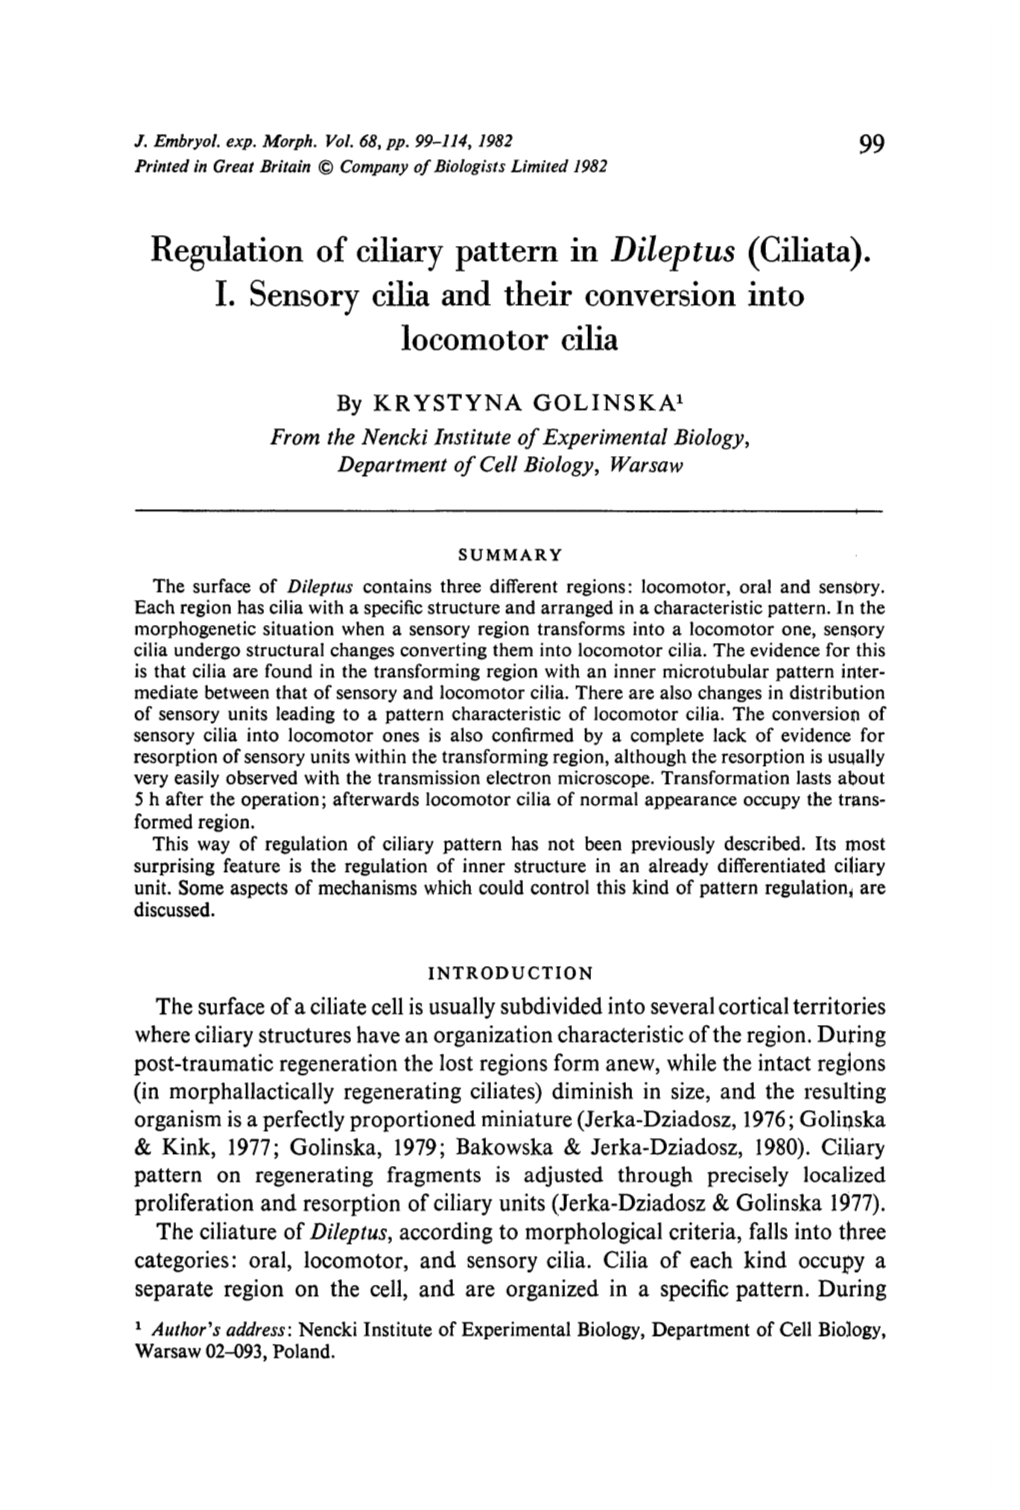 Regulation of Ciliary Pattern in Dileptus (Ciliata). I. Sensory Cilia and Their Conversion Into Locomotor Cilia